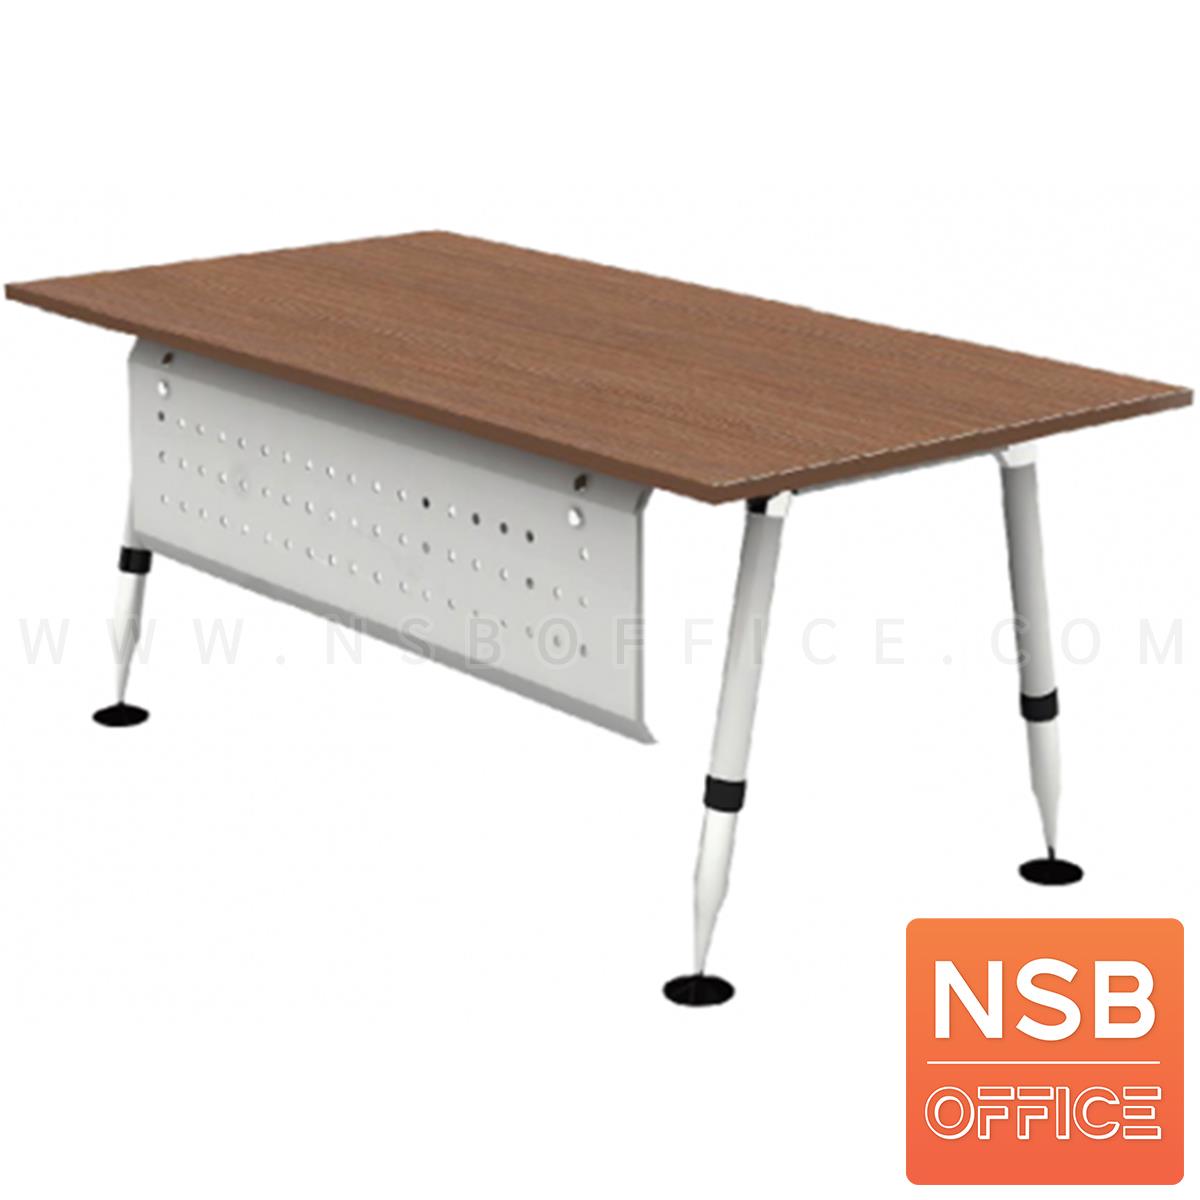 A29A001:โต๊ะผู้บริหารทรงสี่เหลี่ยม รุ่น HB-DK04-1890  ขนาด 180W cm. ขาเหล็กสีขาวปลายโครเมี่ยม